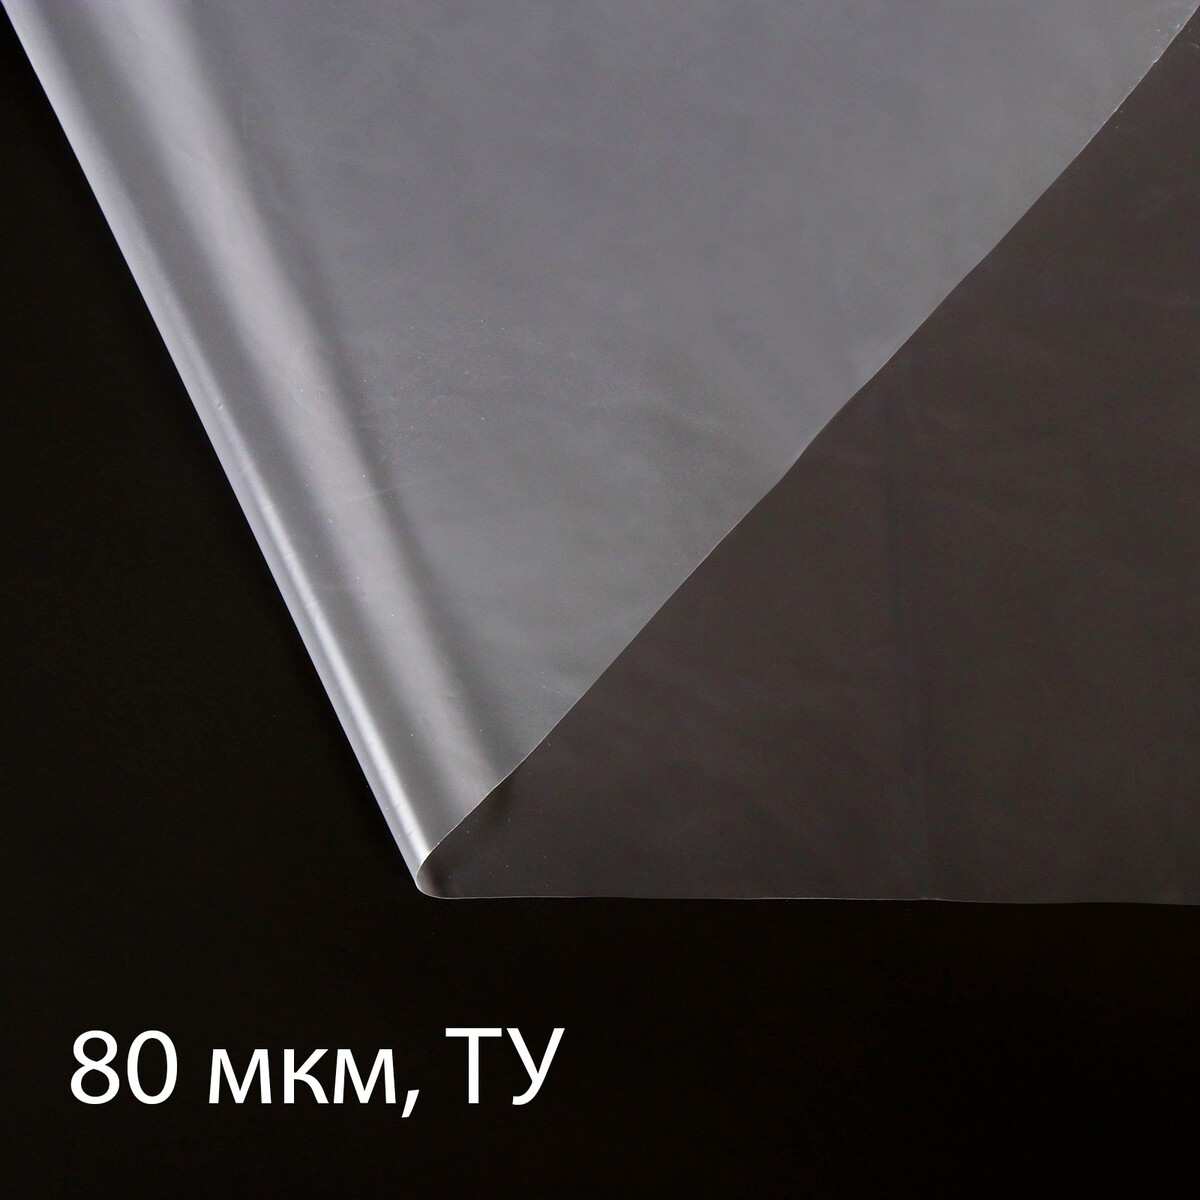 Пленка полиэтиленовая 80 мкм, прозрачная, длина 5 м, ширина 3 м, рукав (1.5 × 2 м), эконом 50% пленка полиэтиленовая прозрачная рукав 1 5 × 2 м толщина 60 мкм 10 × 3 м эконом 50%